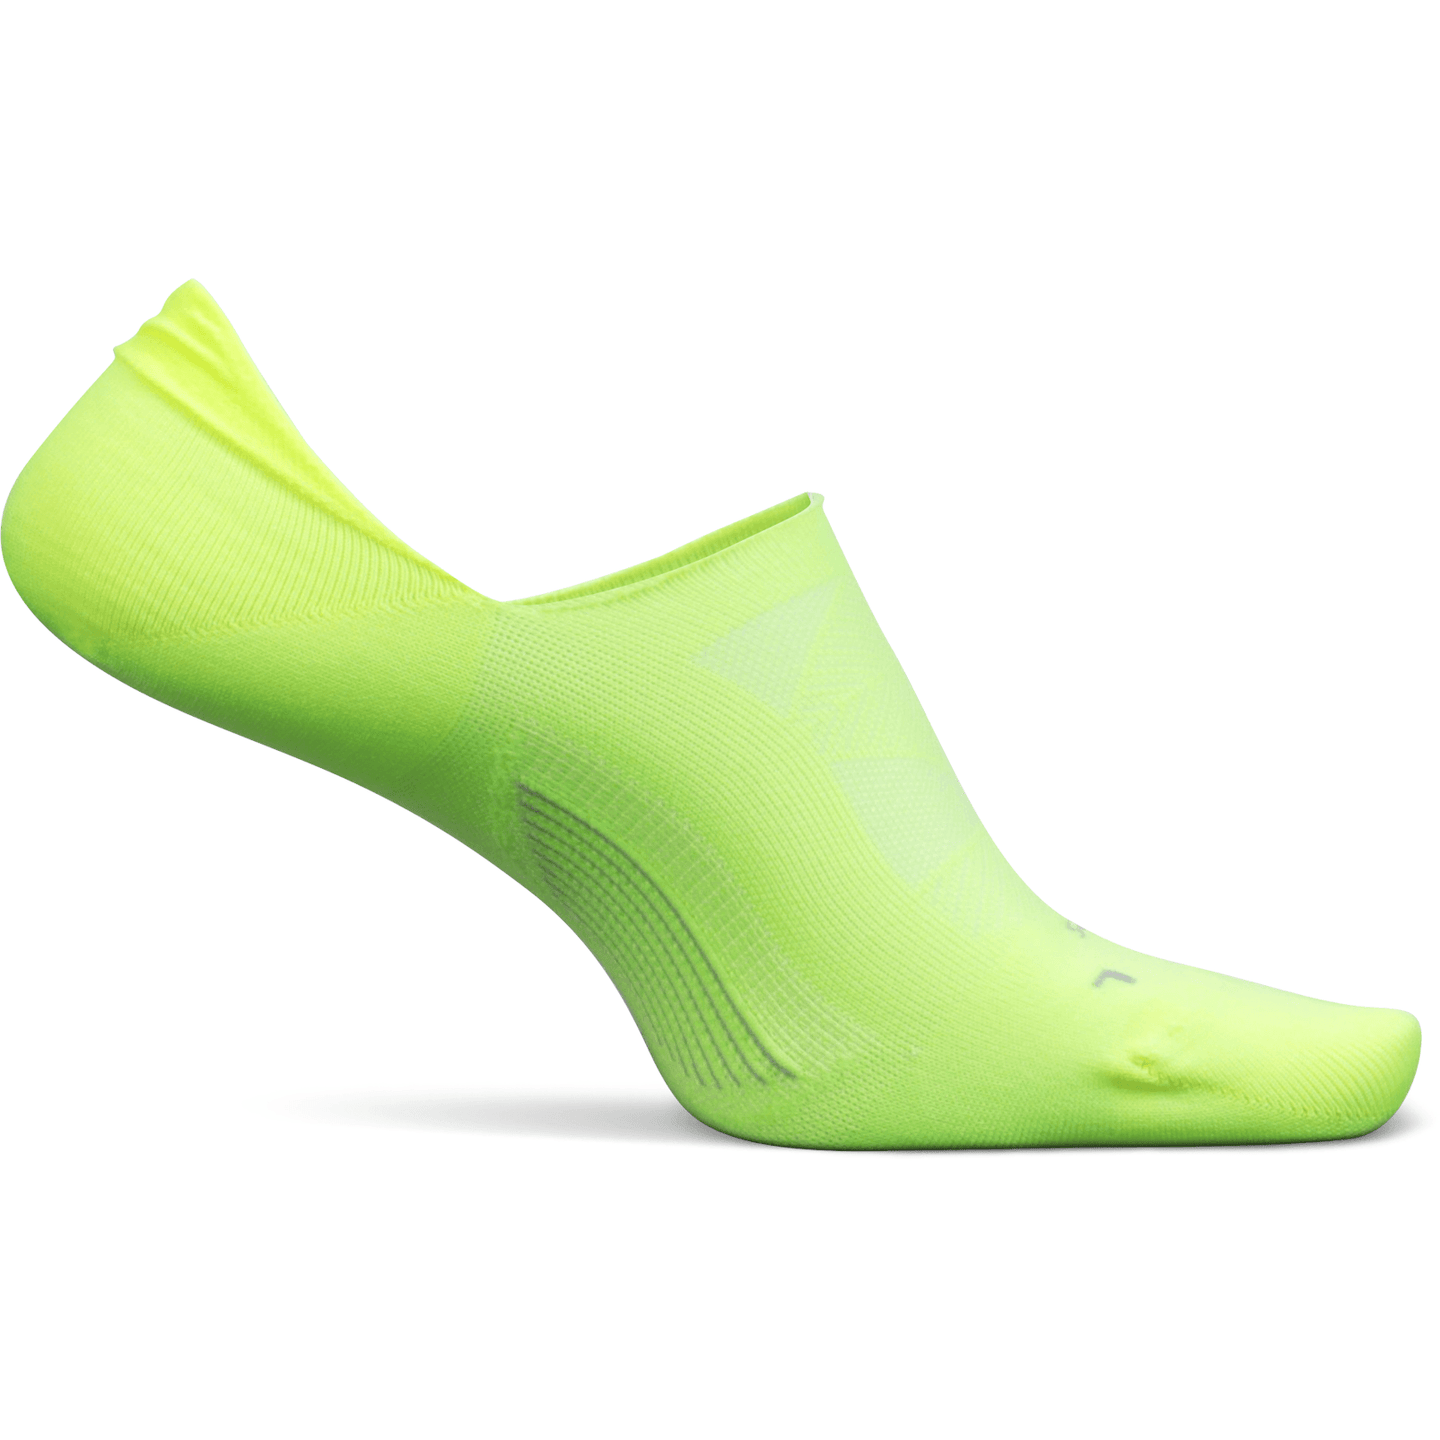 Elite Ultra Light Invisible - Feetures - Karavel Shoes - karavelshoes.com